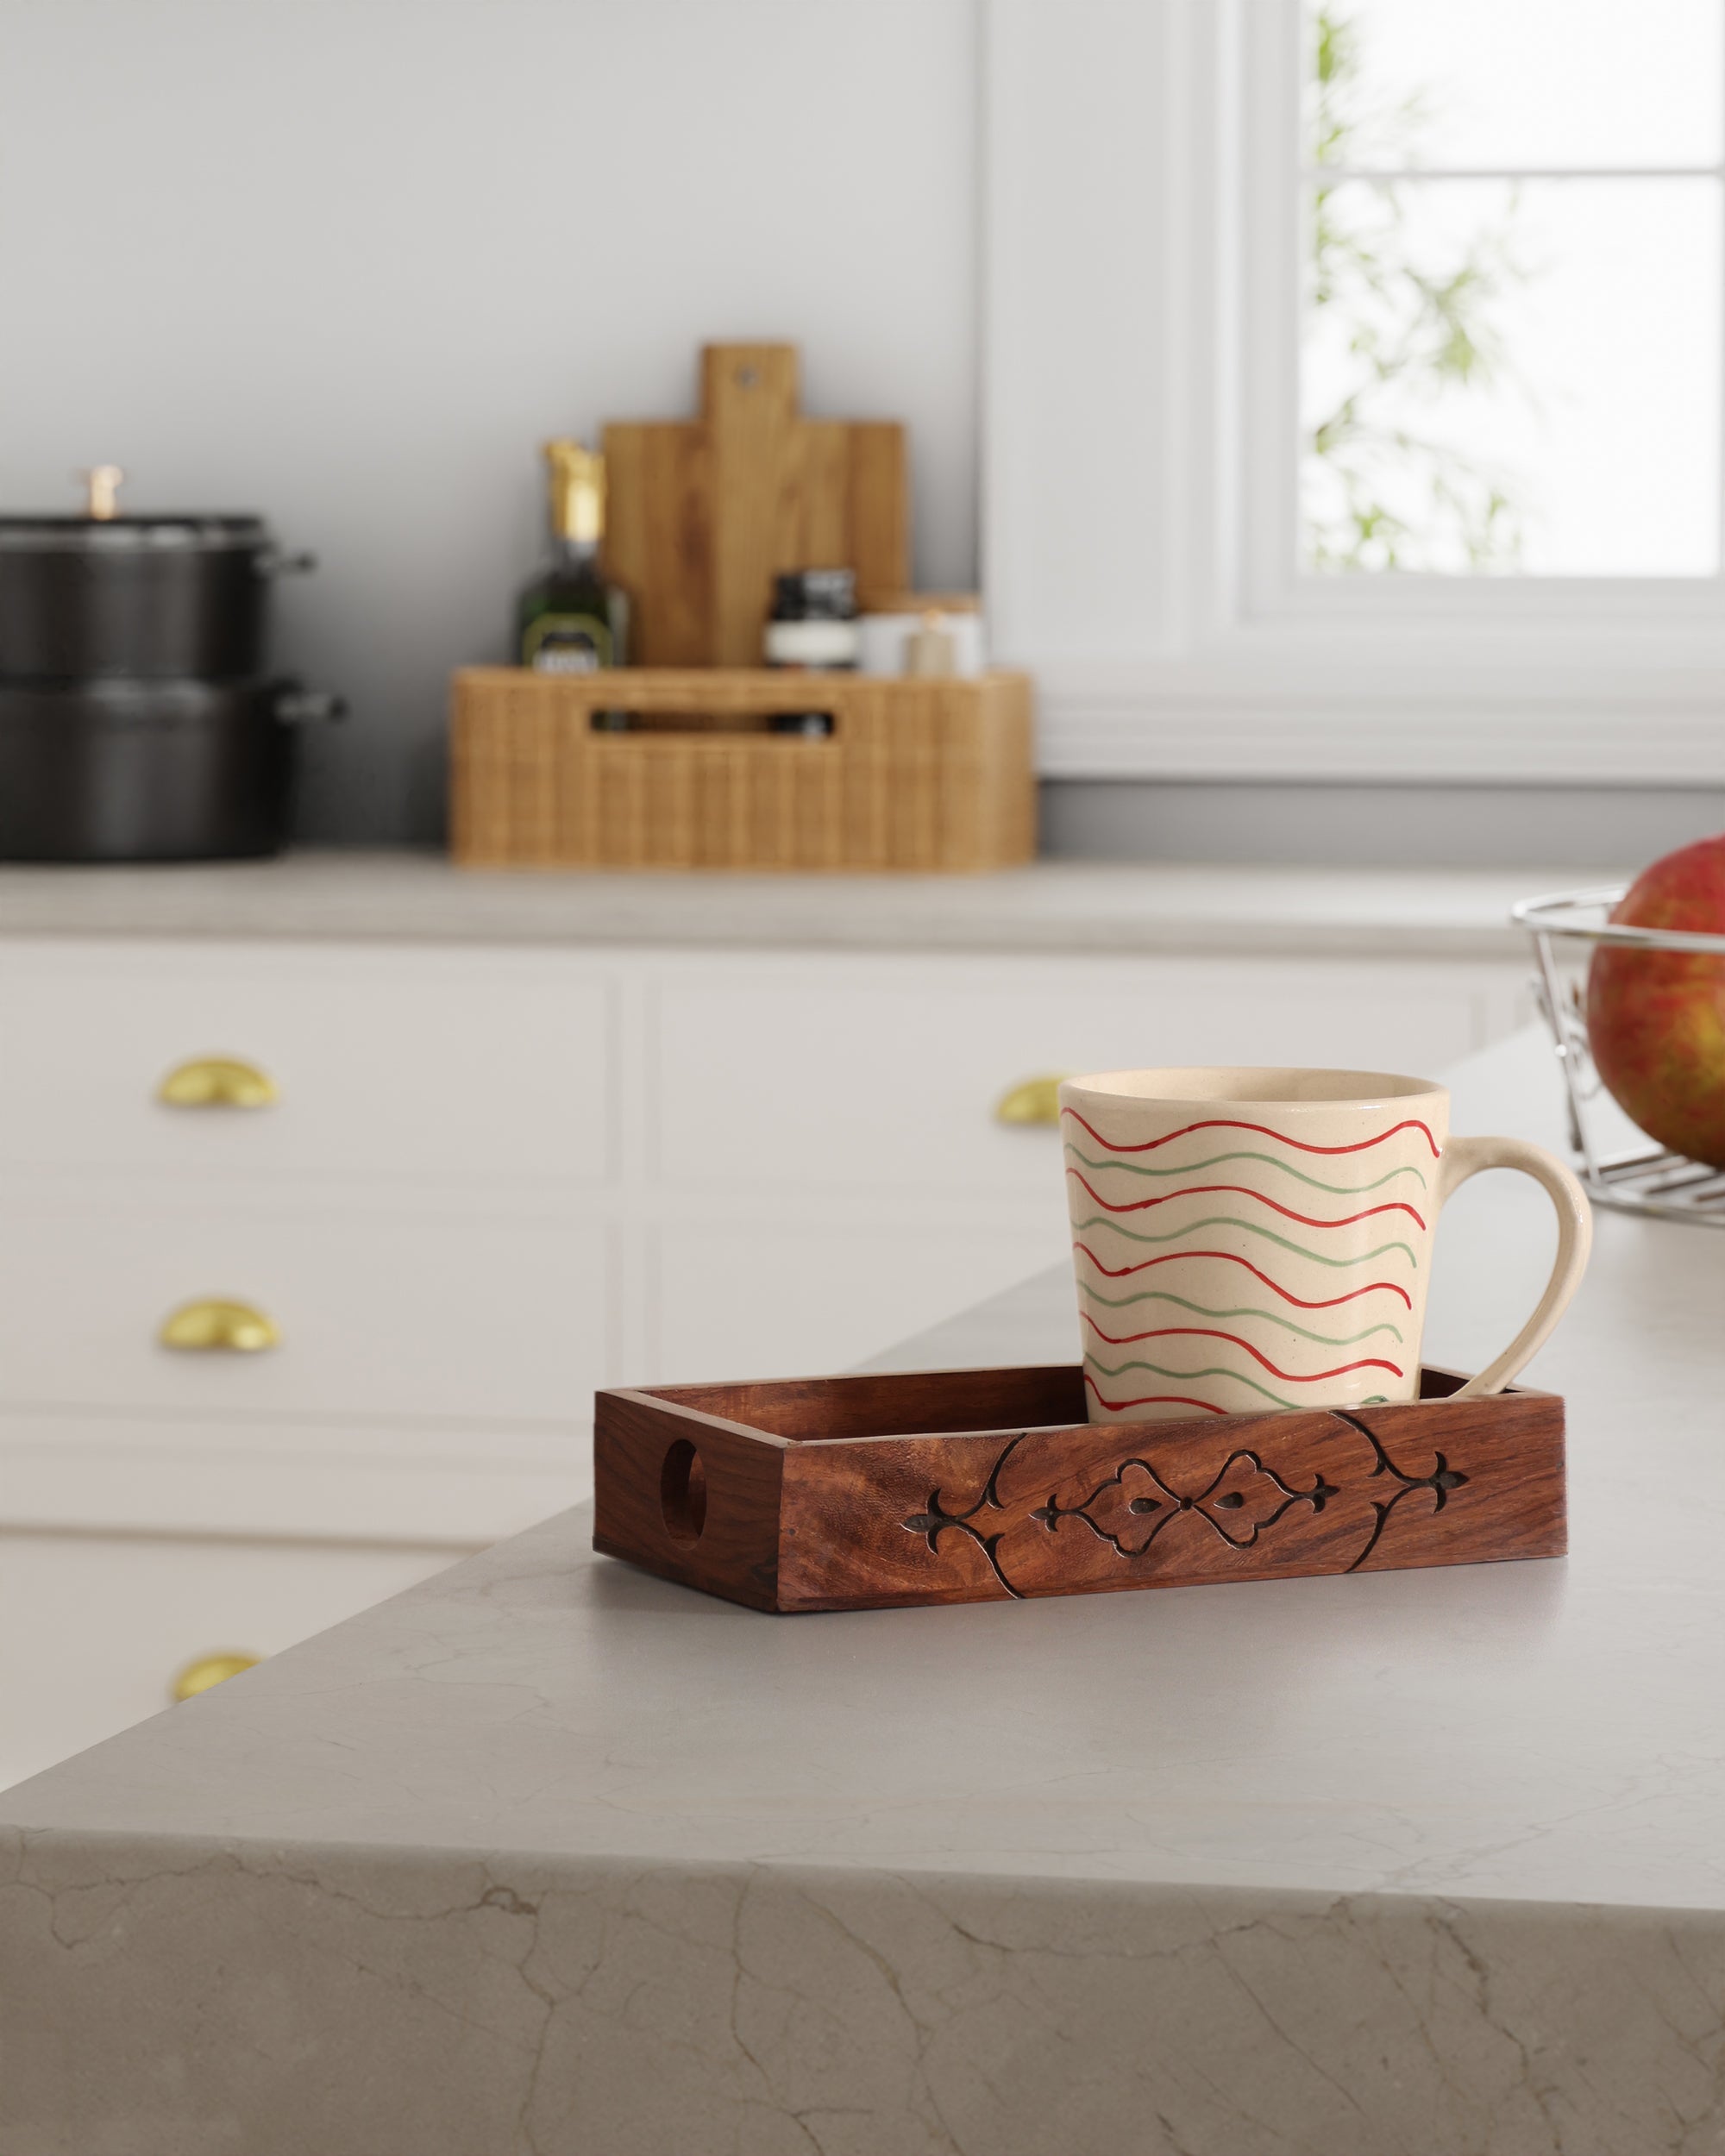 Wooden Tray + Ceramic Mug